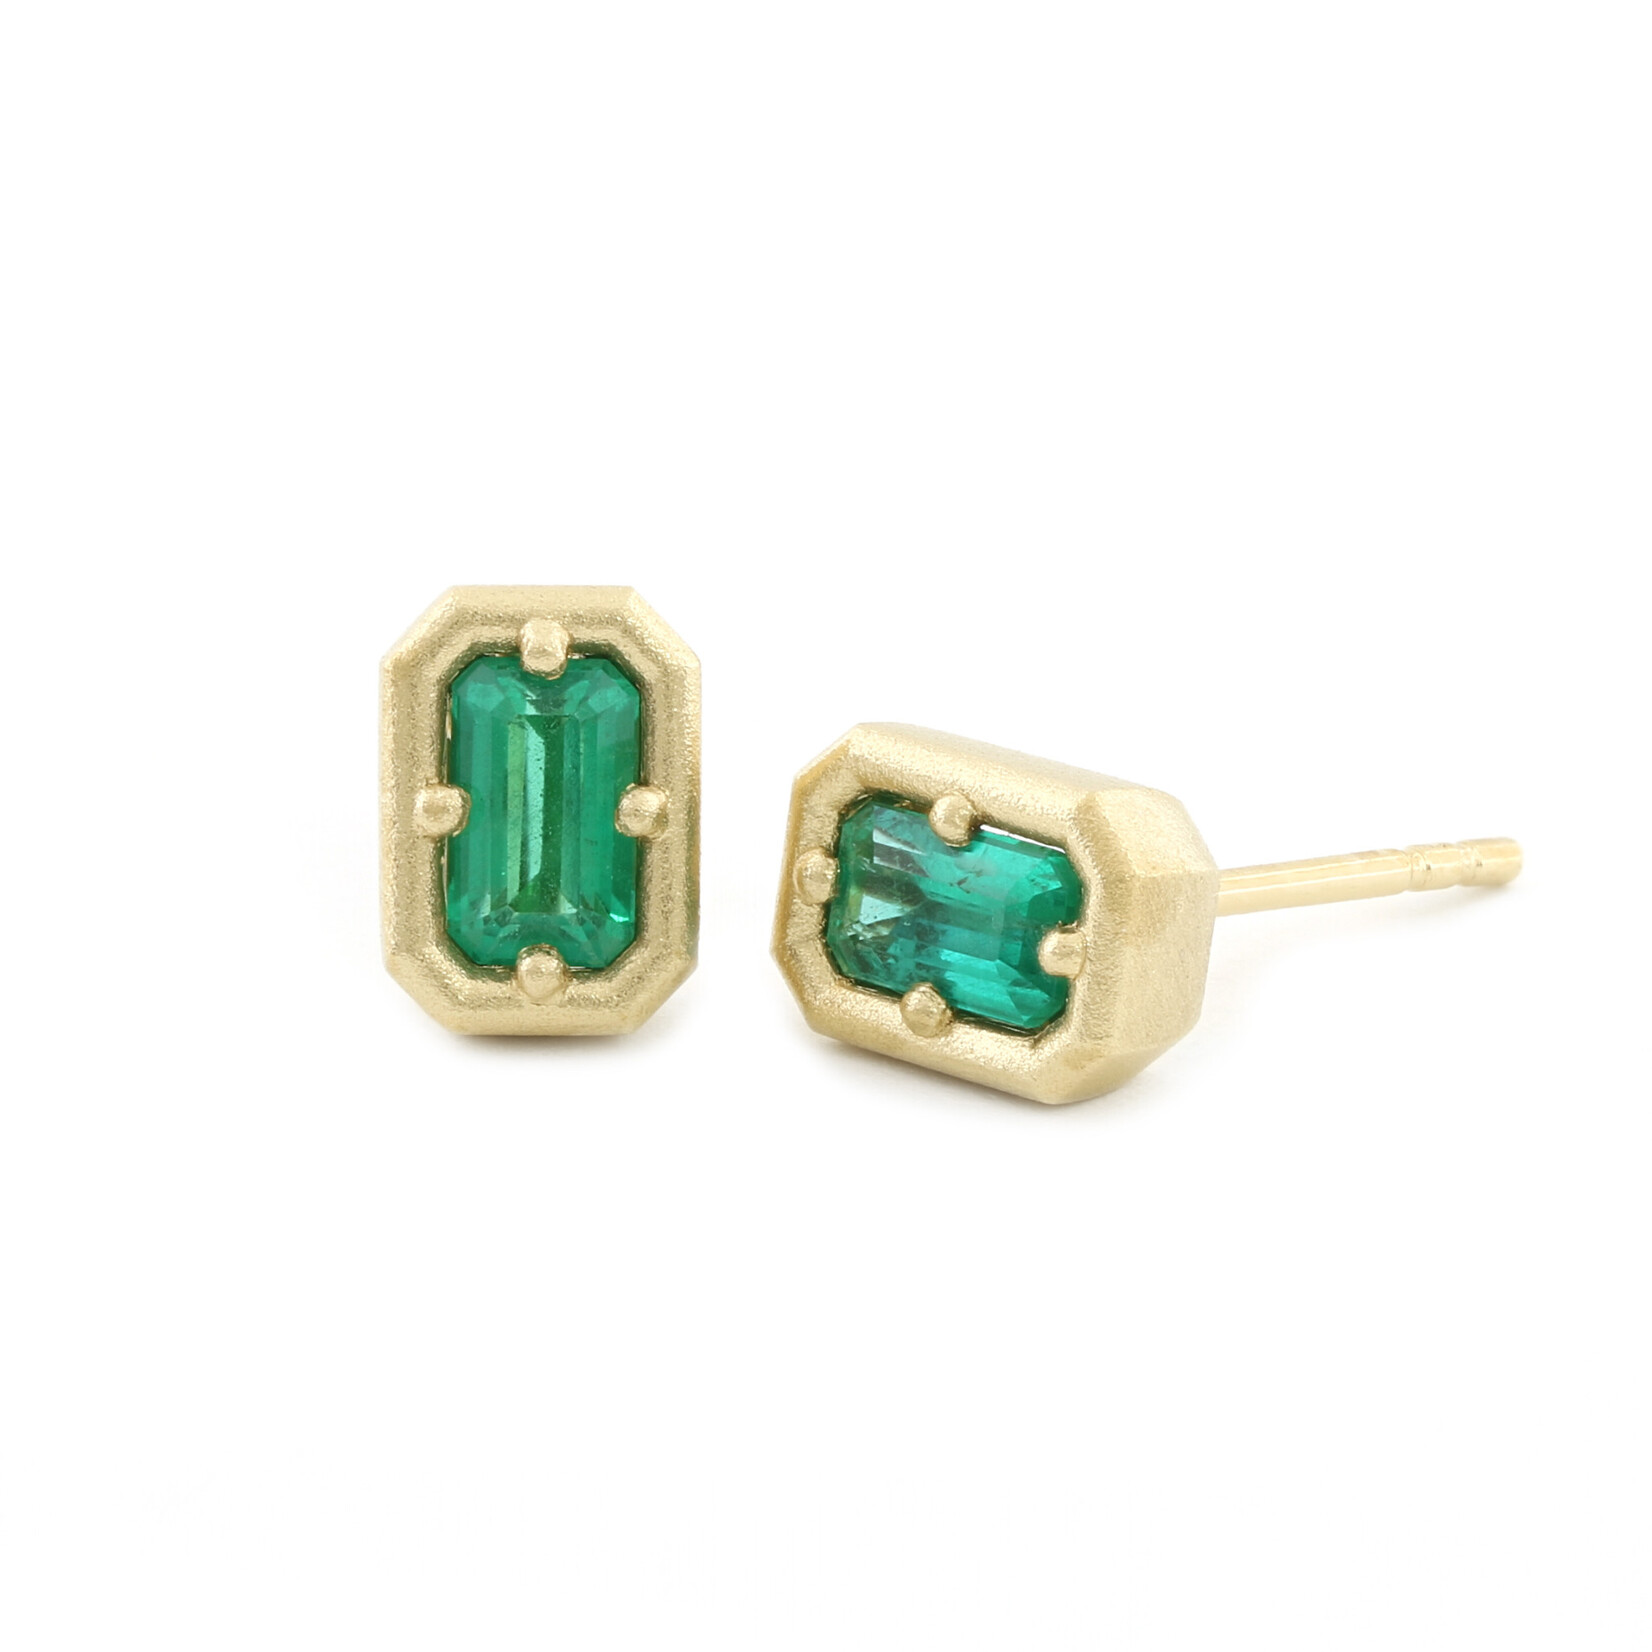 Baxter Moerman Anika Studs Earrings with Emeralds